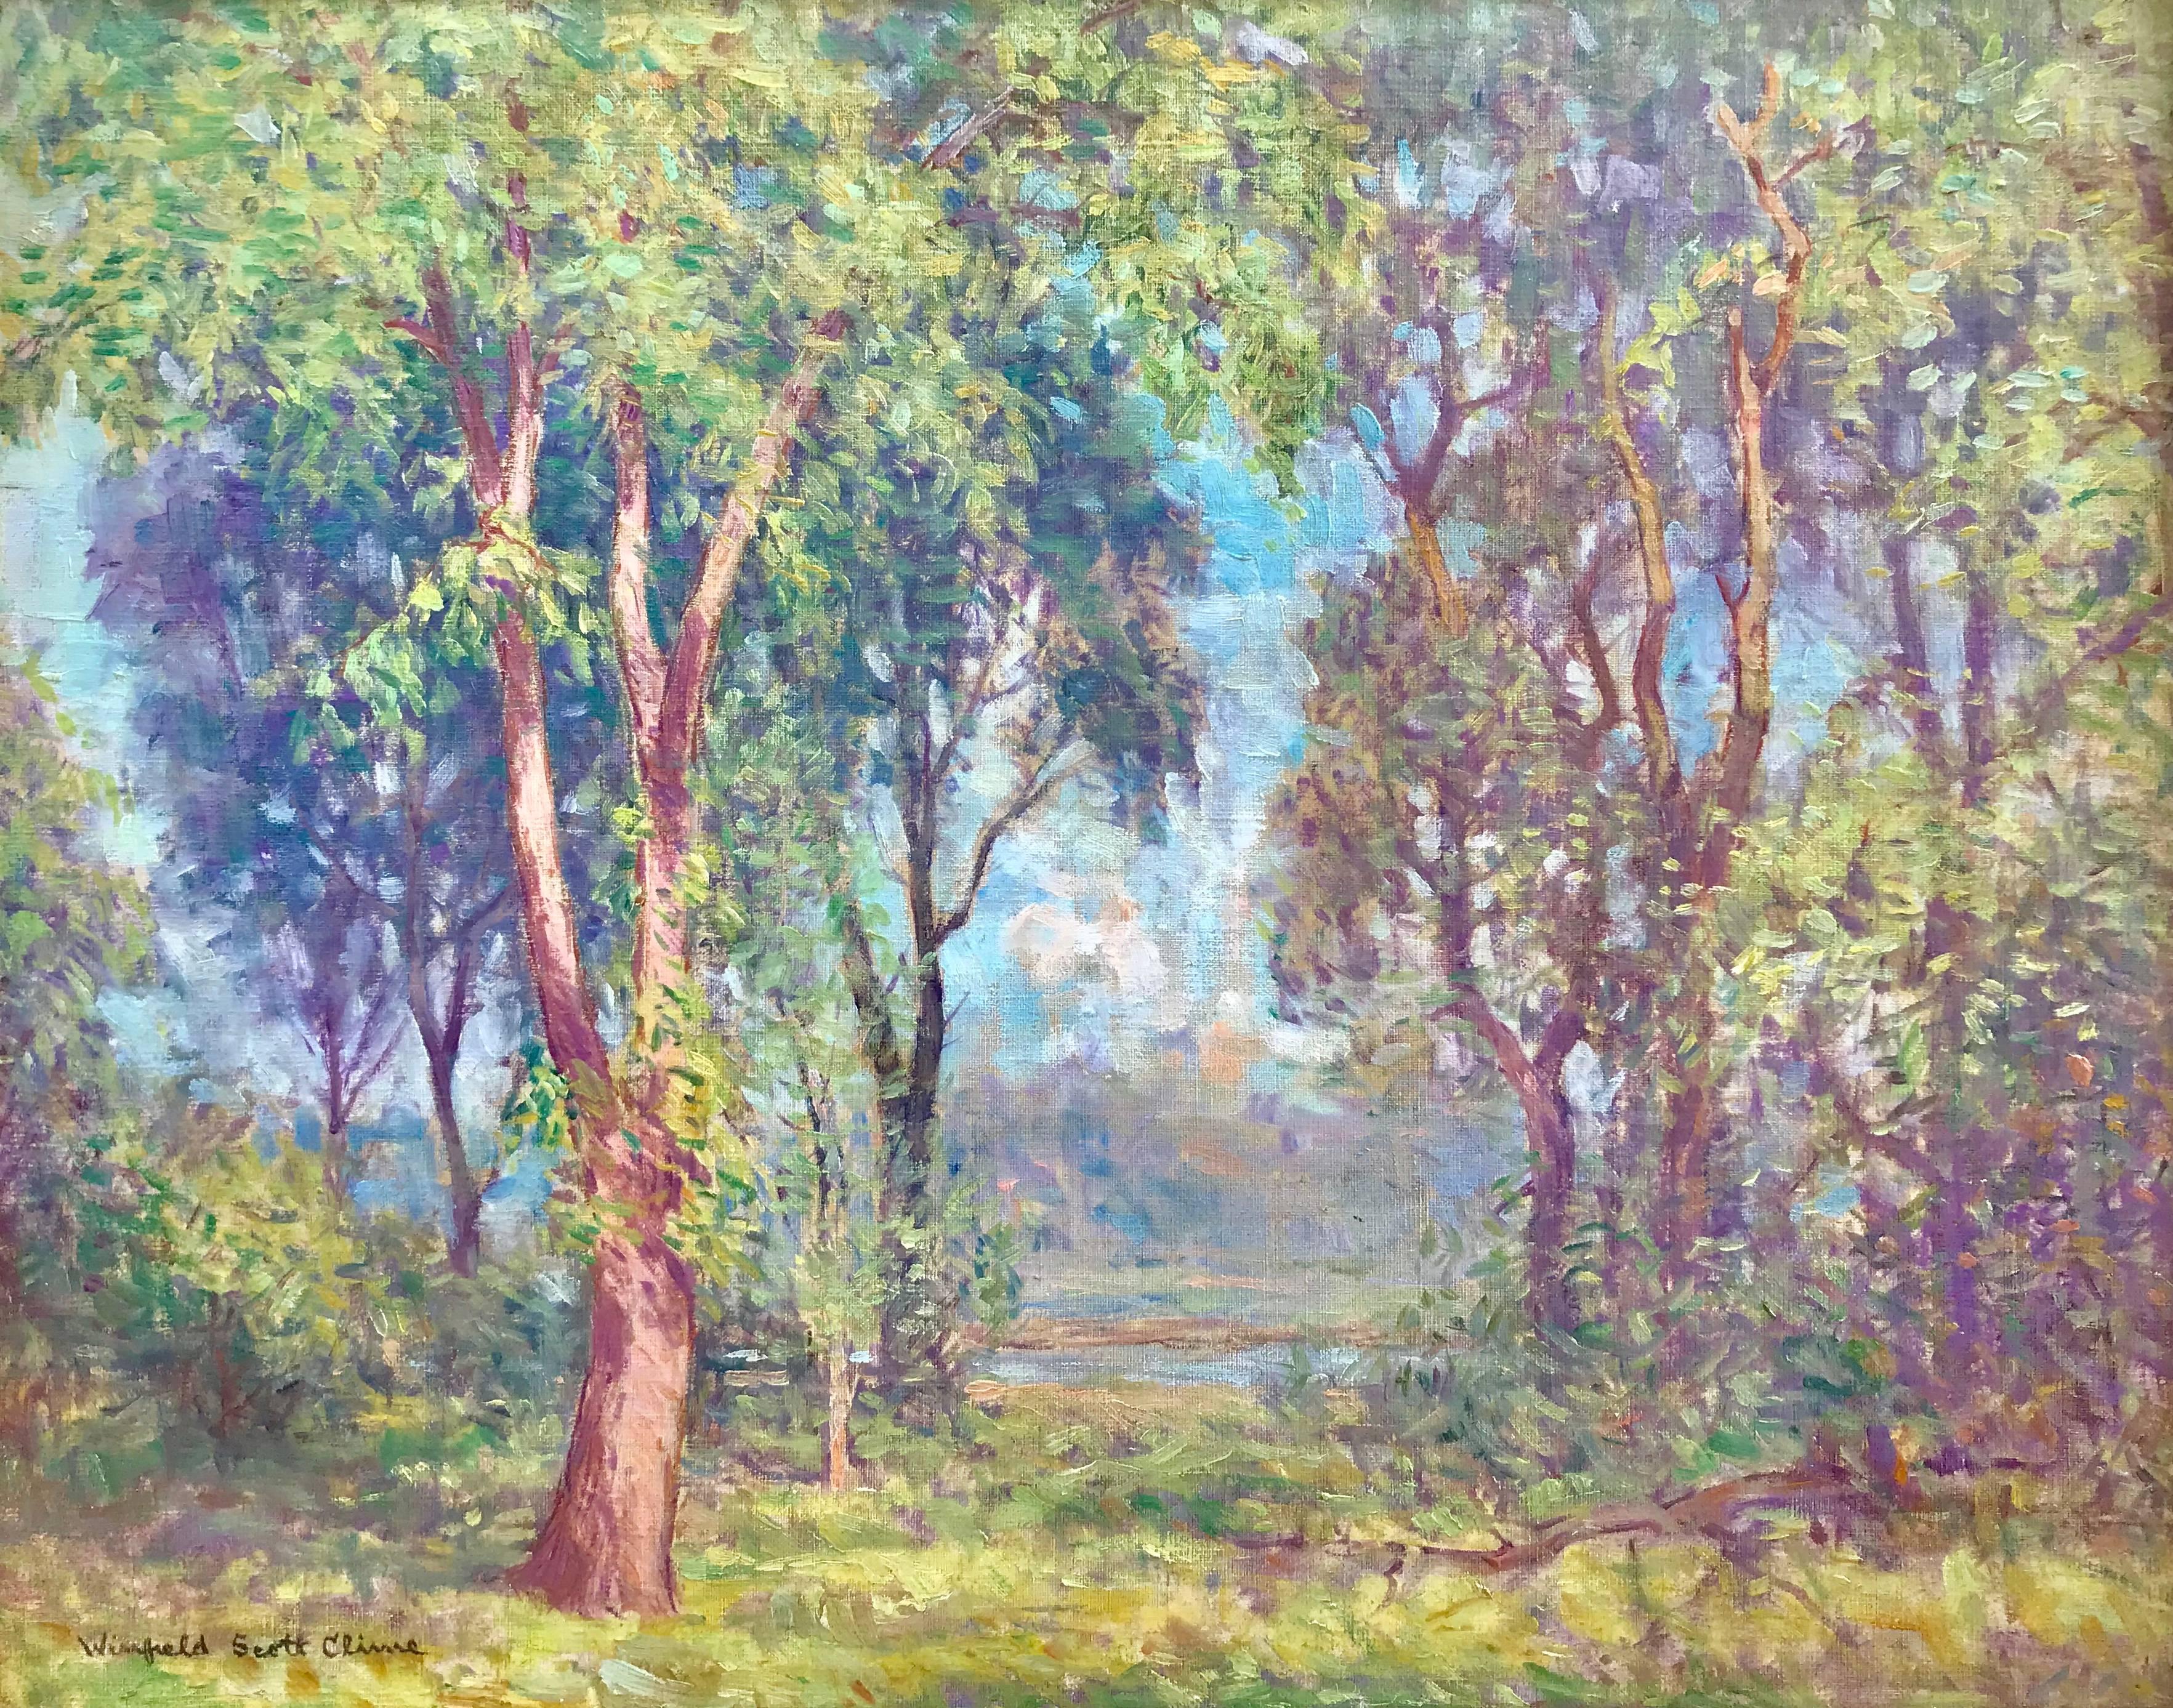 Winfield Scott Clime Landscape Painting – „Woodland Vista“